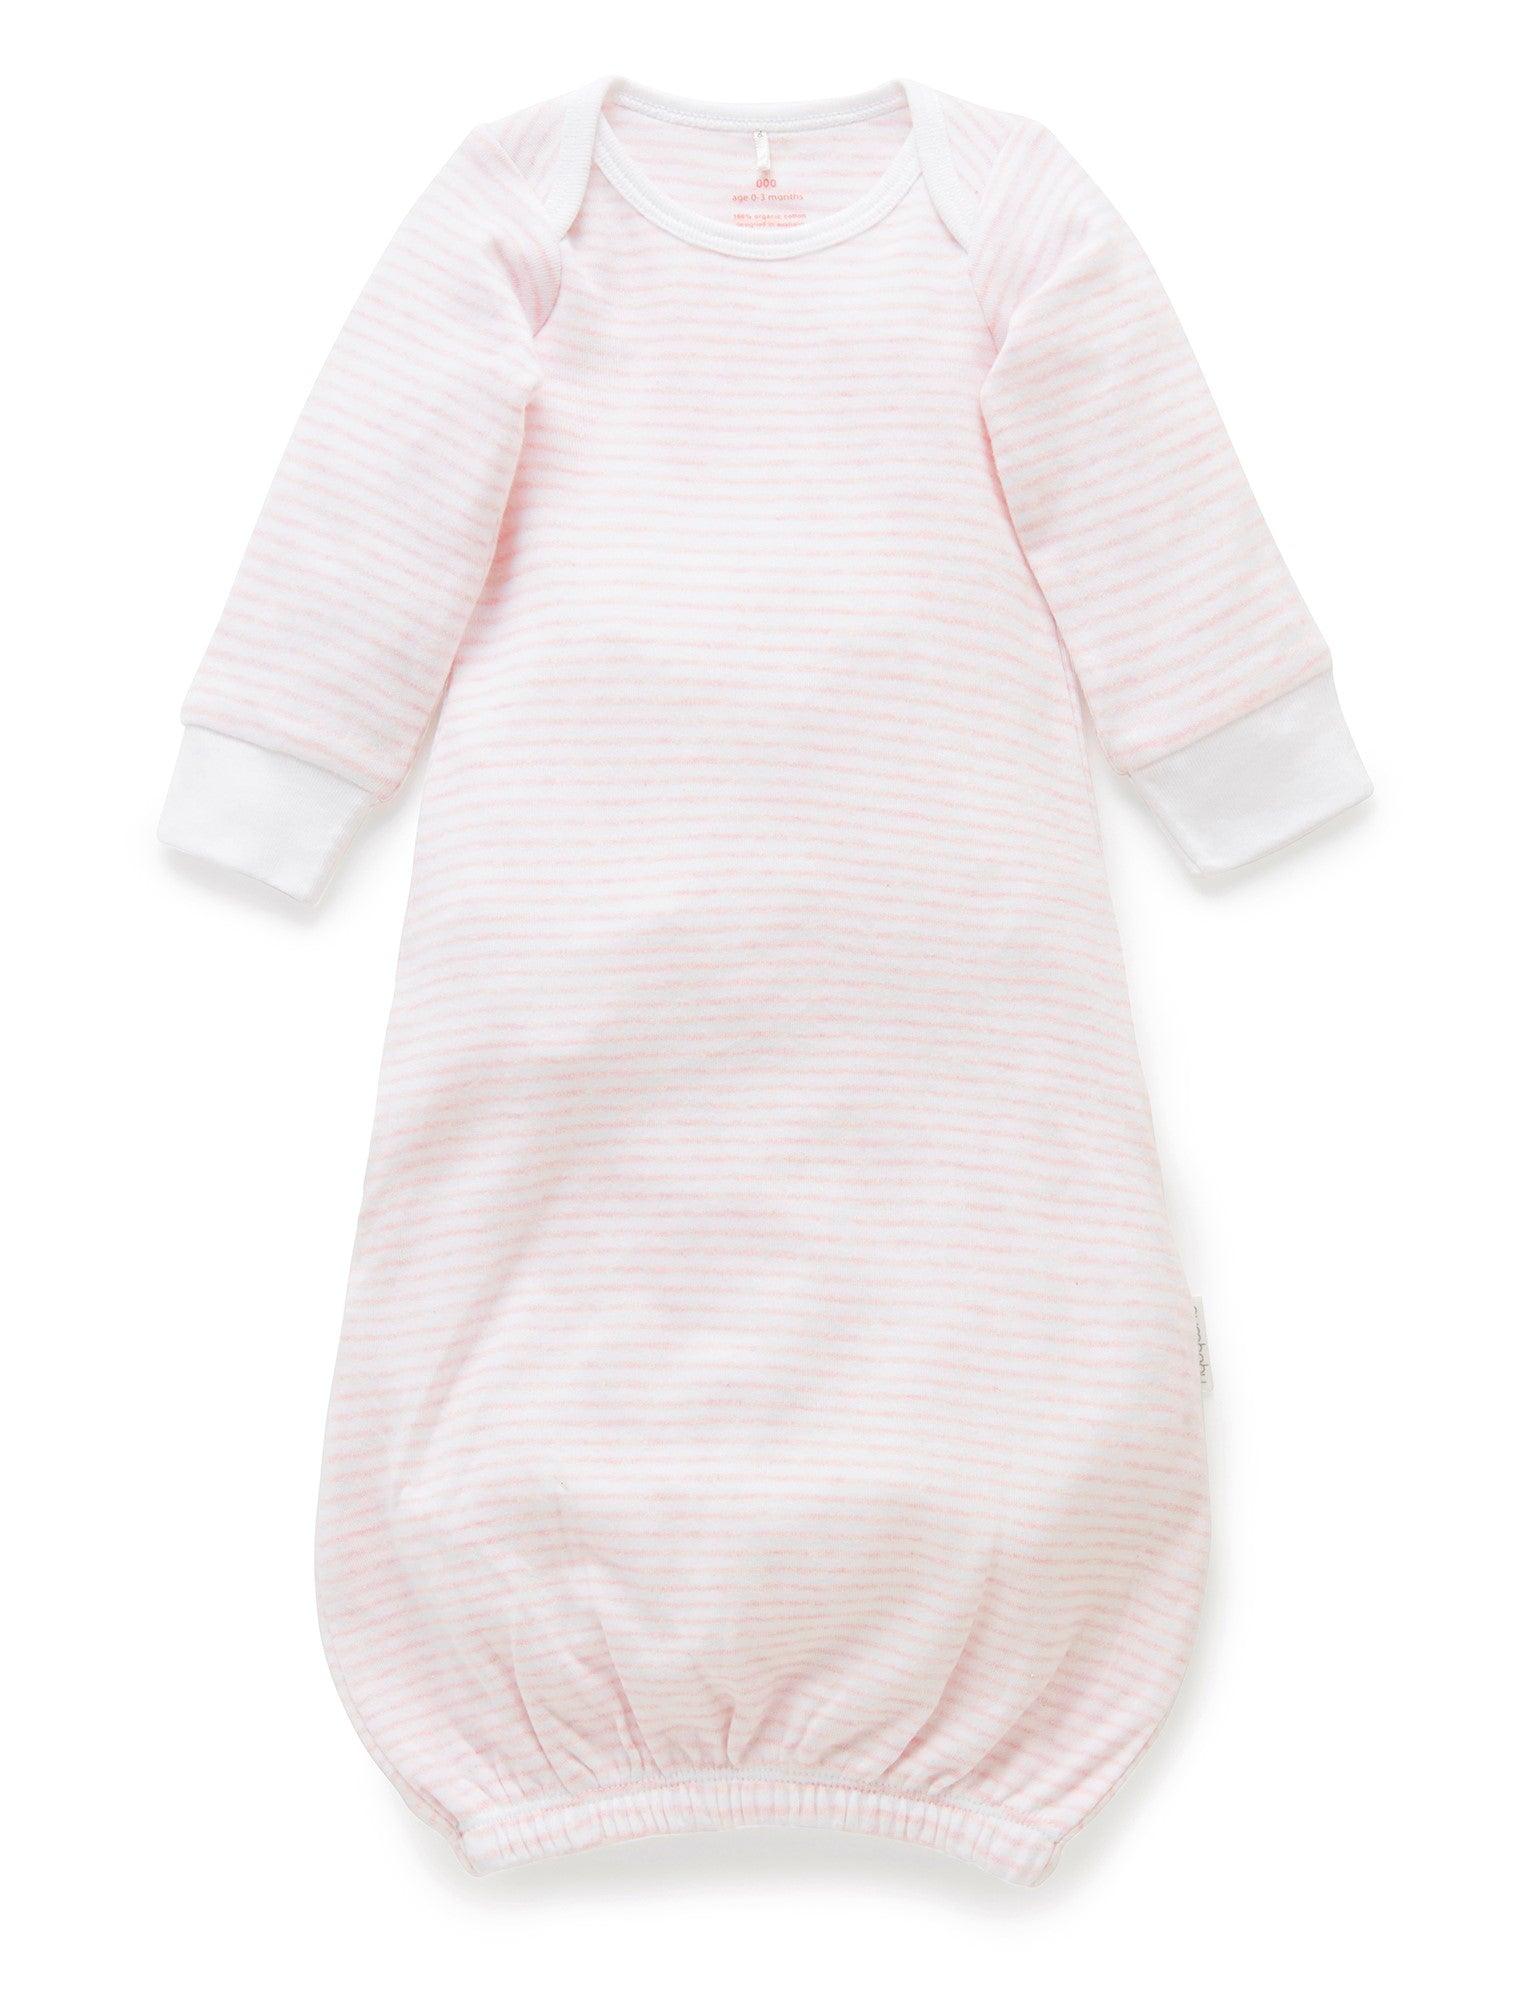 Newborn Sleep suit Melange Stripe  - Pale Pink - Sleep suit - Purebaby